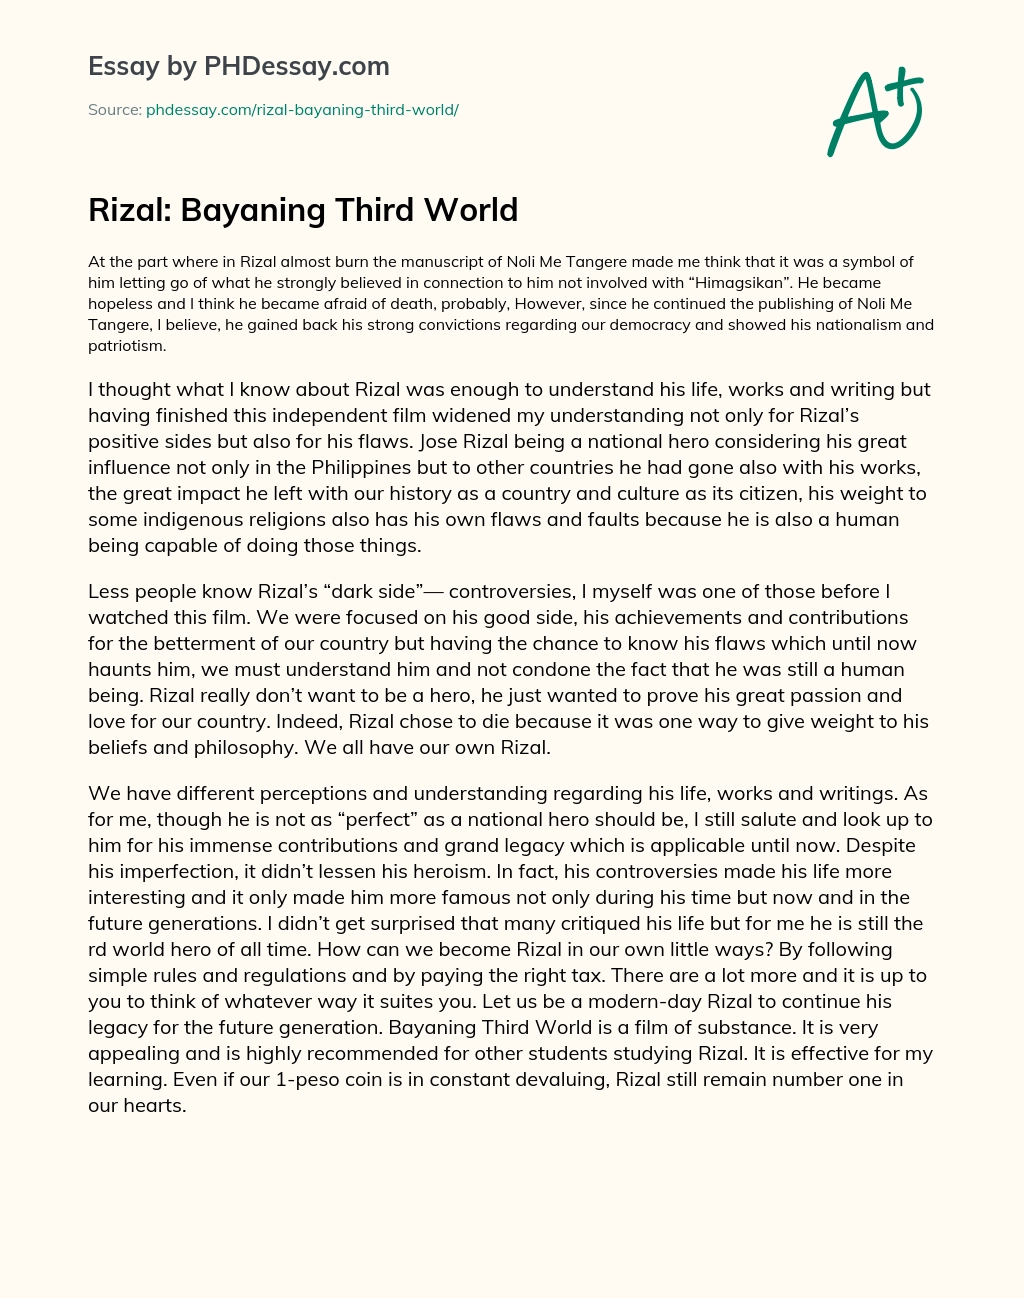 Rizal: Bayaning Third World essay